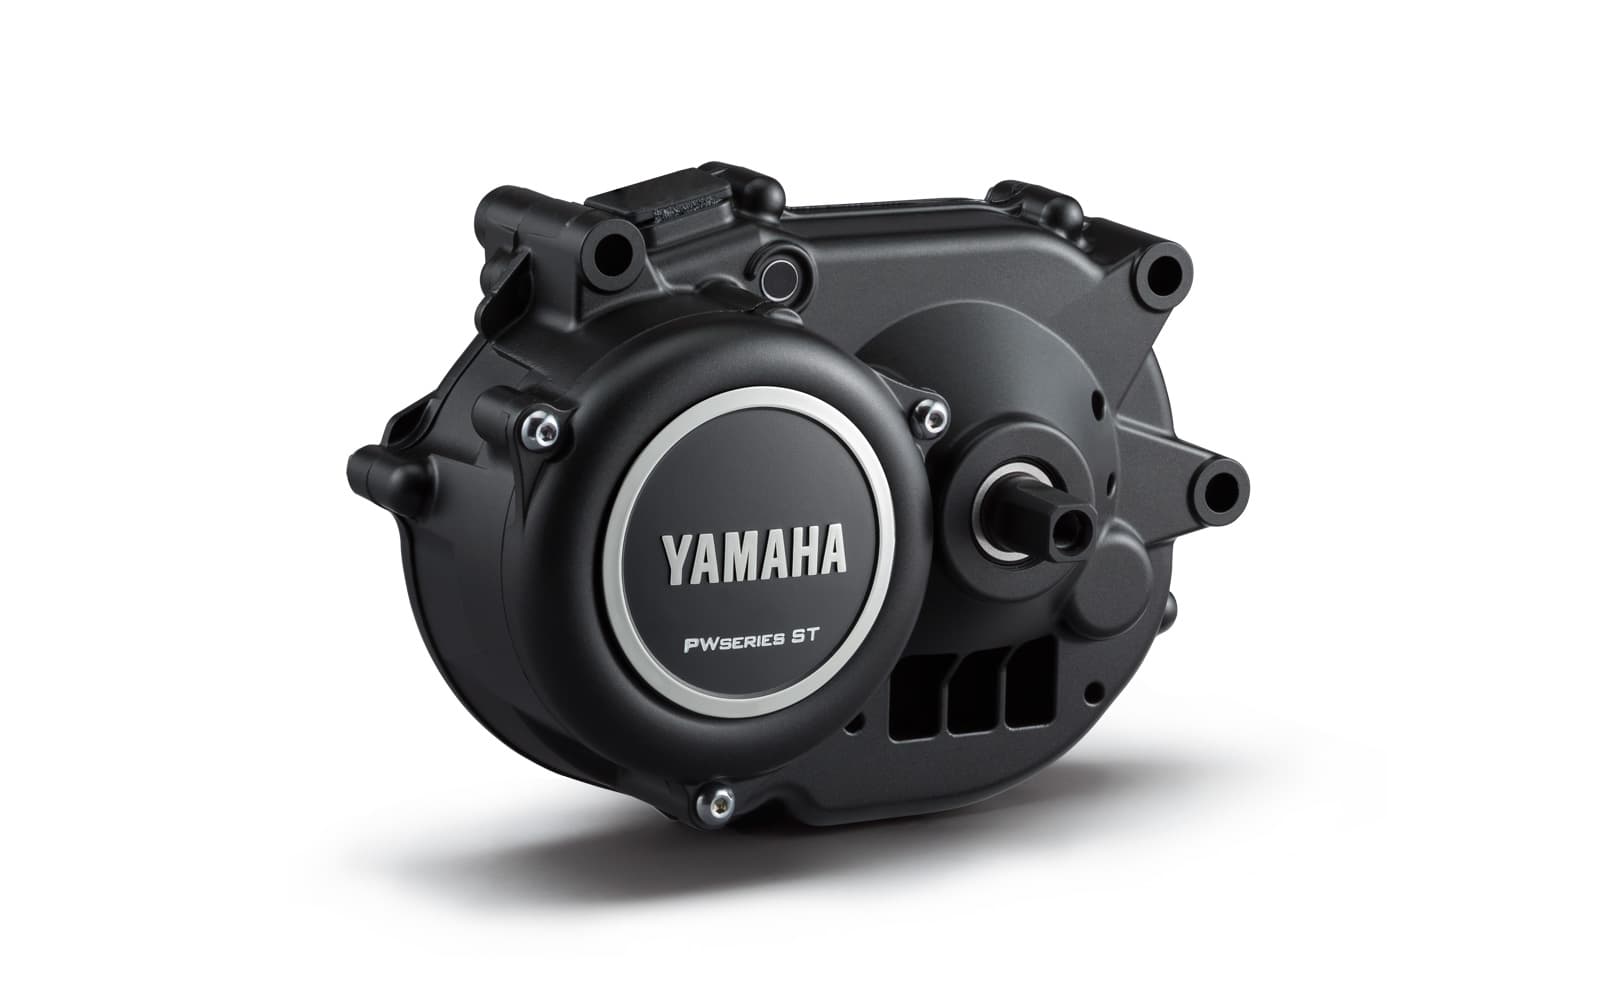 Are Yamaha E-Bike Motors Good? - PW Series ST